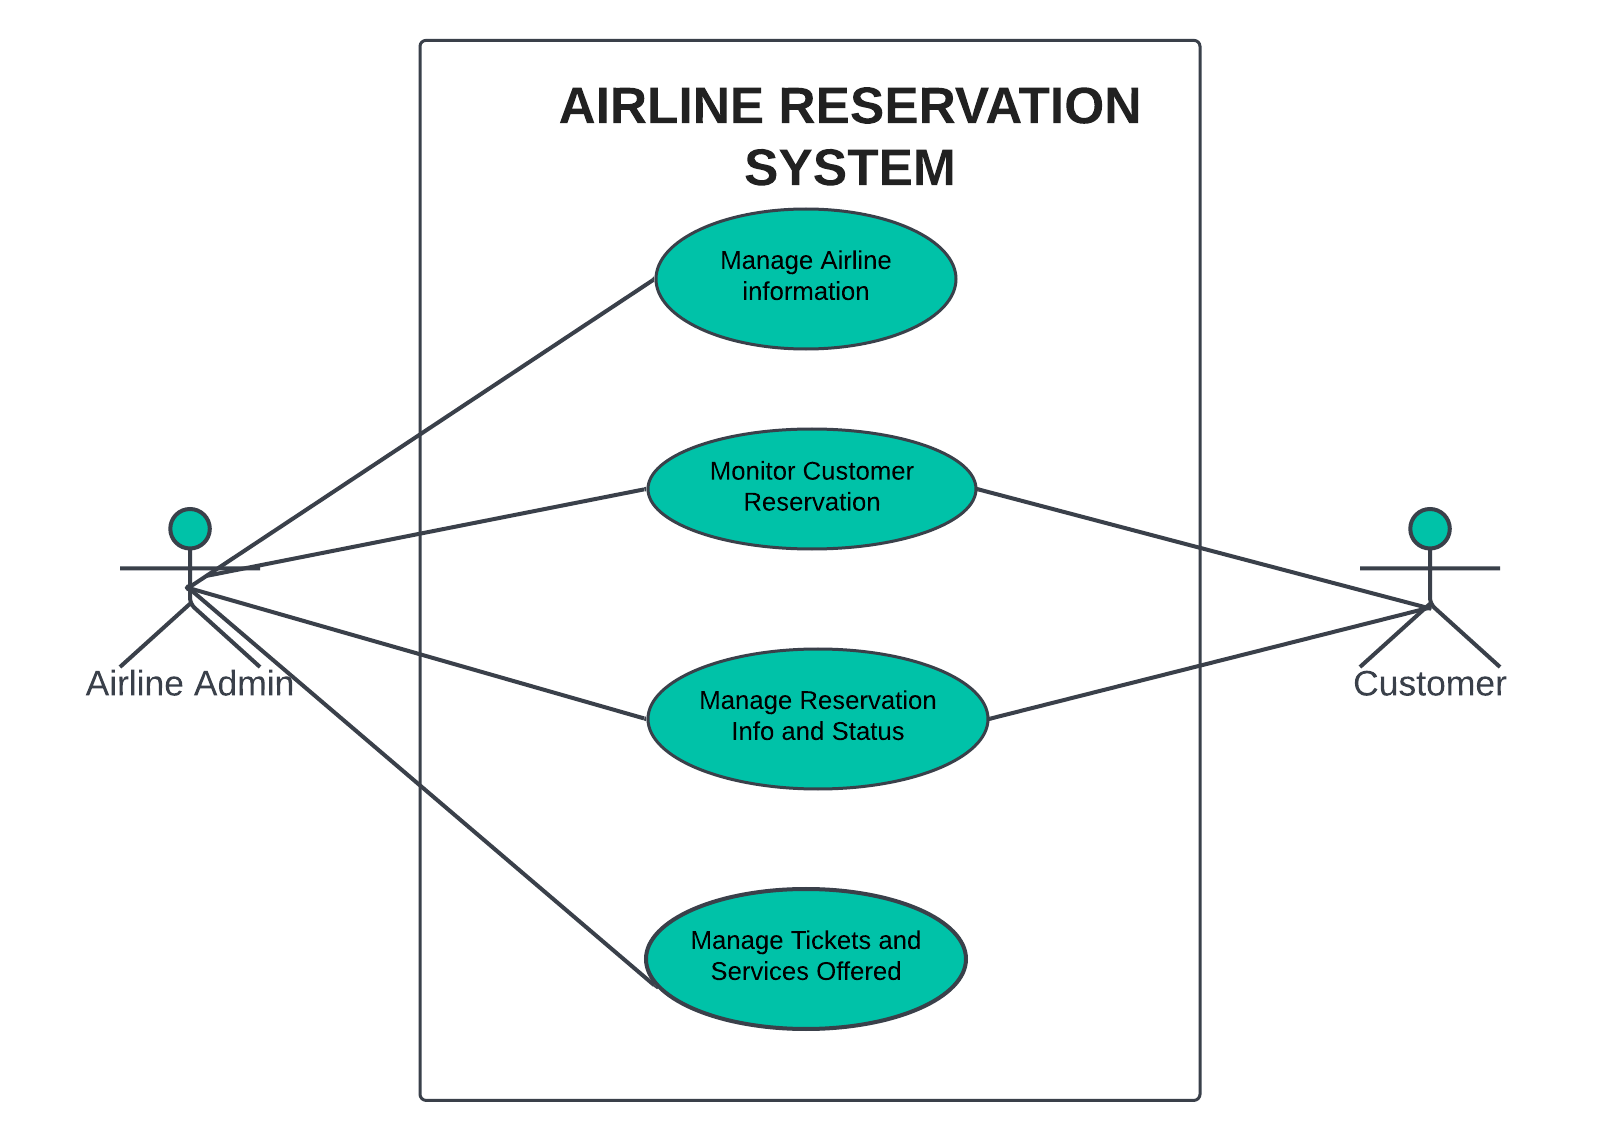 AIRLINE RESERVATION SYSTEM USE CASE DIAGRAM